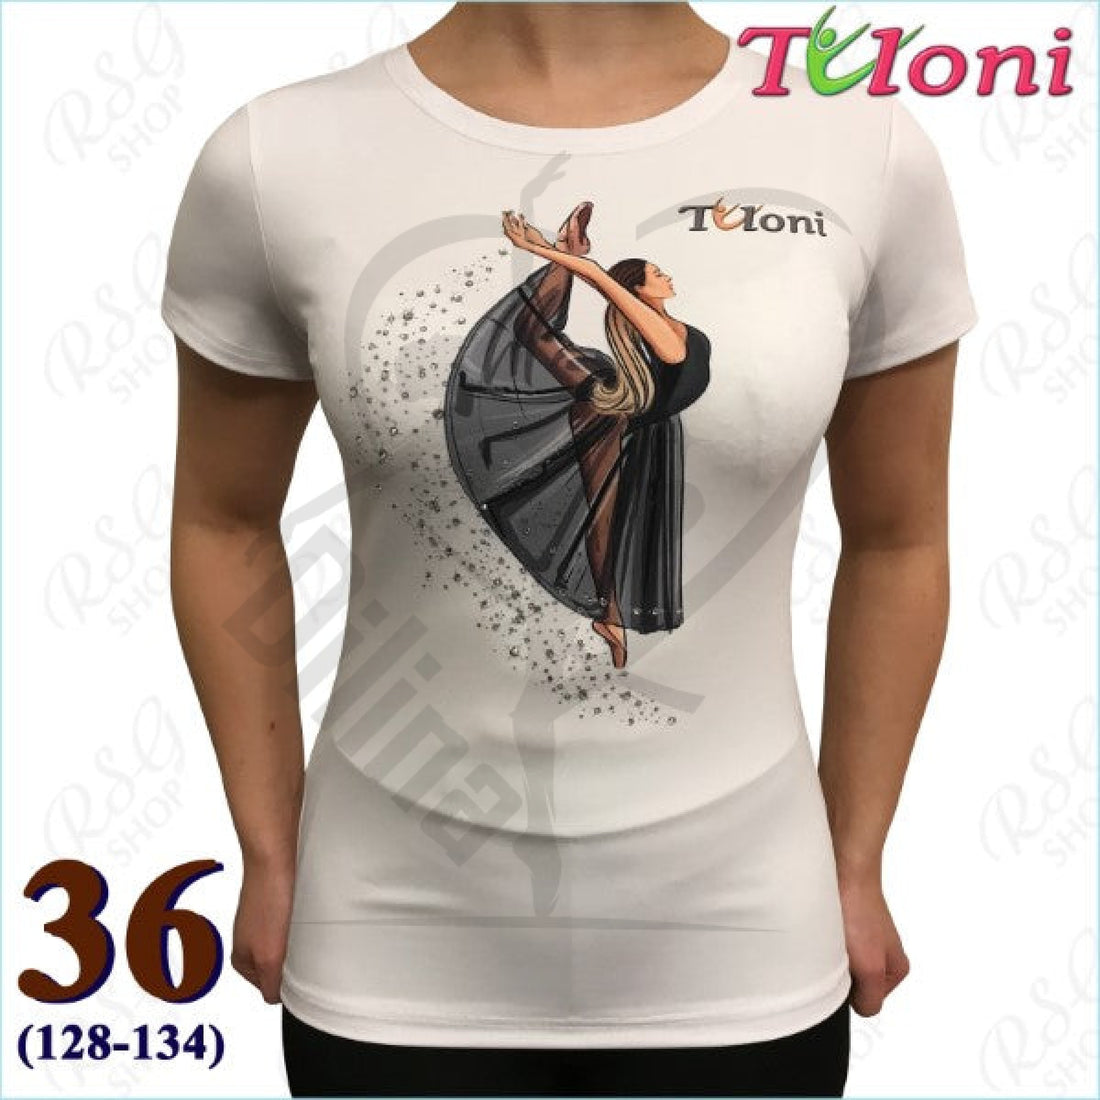 Tuloni White T-Shirt Mod. Ballet 36 (128-134) T Shirts & Tops